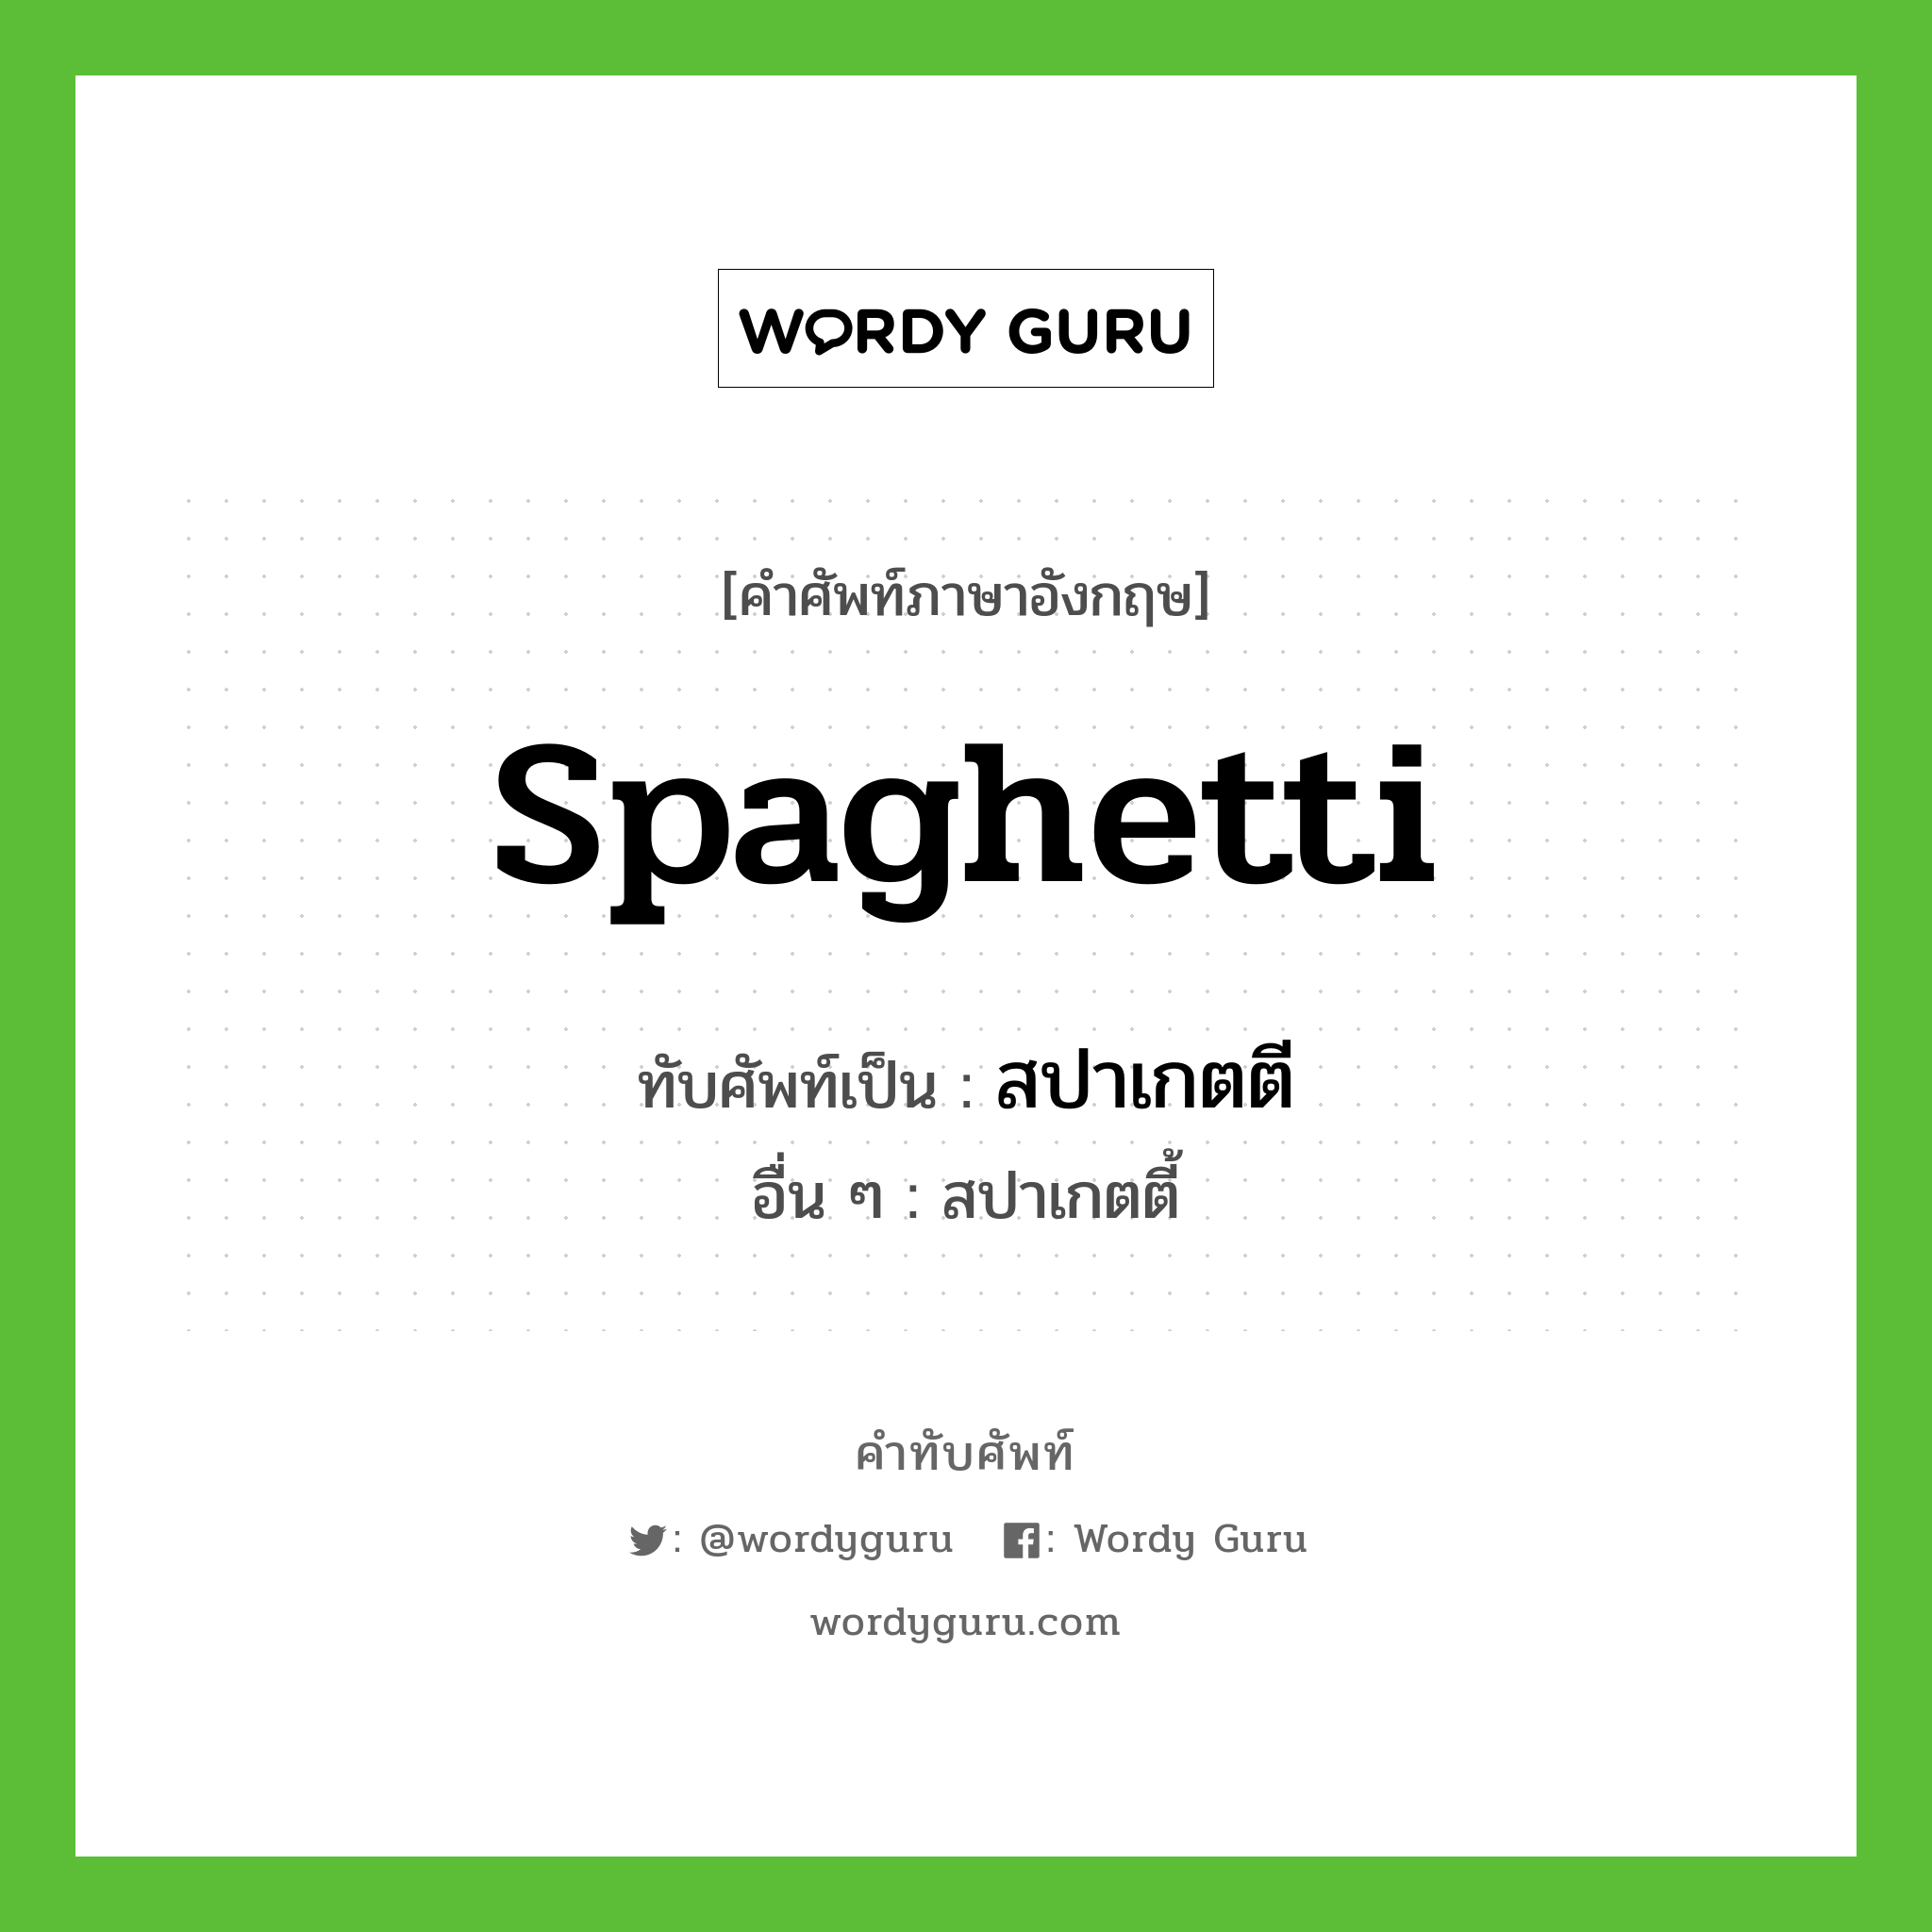 spaghetti เขียนเป็นคำไทยว่าอะไร?, คำศัพท์ภาษาอังกฤษ spaghetti ทับศัพท์เป็น สปาเกตตี อื่น ๆ สปาเกตตี้